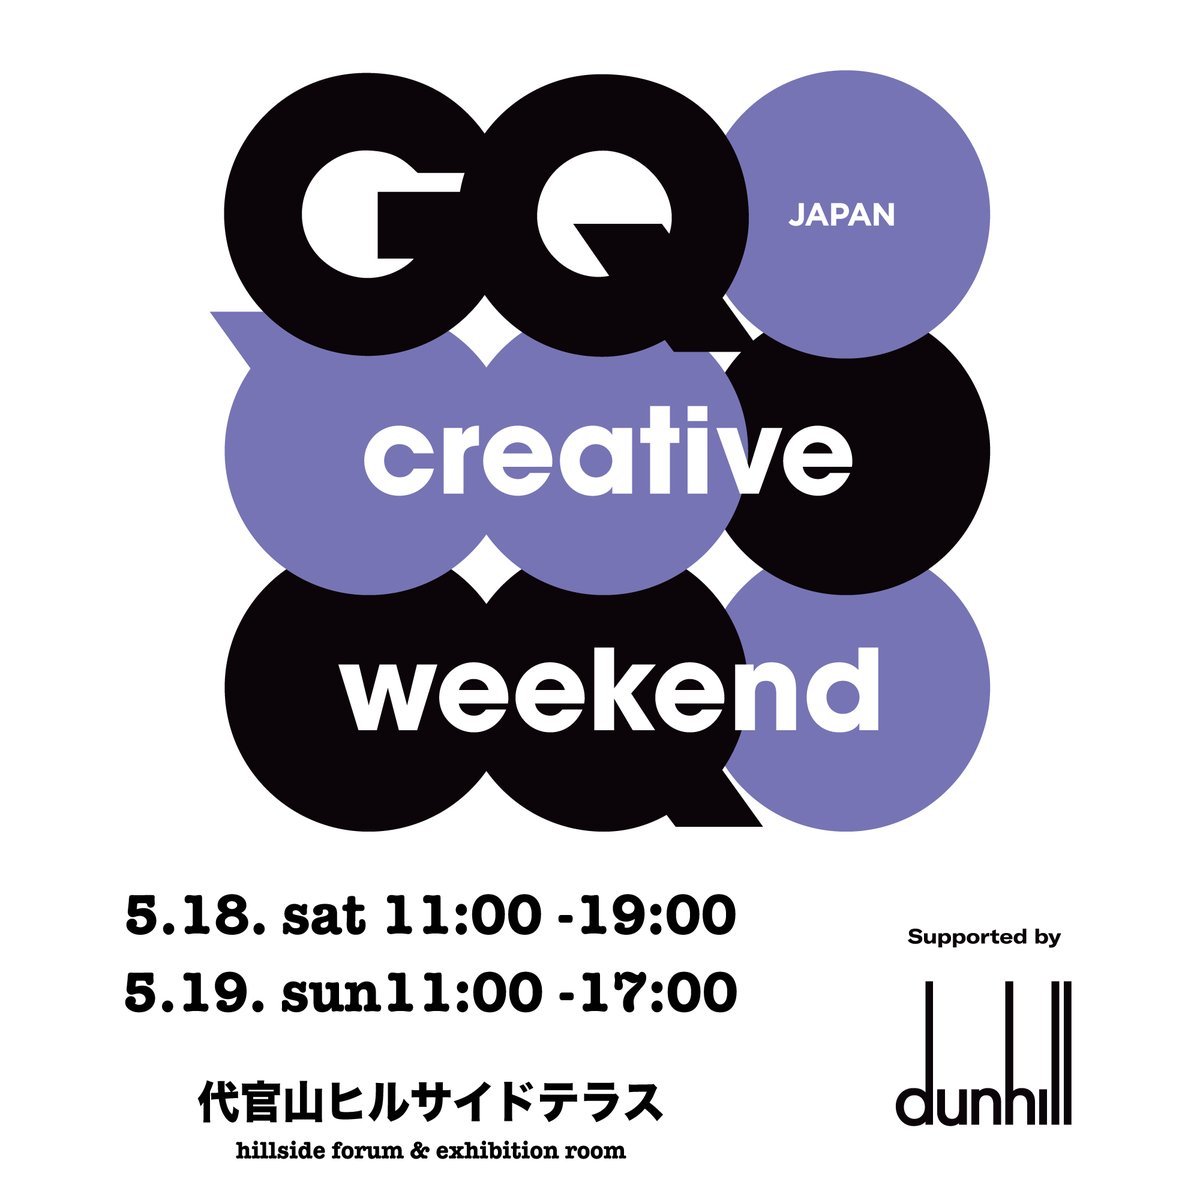 「GQ JAPAN Creative Weekend」のアンバサダーとして、俳優・笠松将が就任！

『GQ JAPAN』石田潤とのトークショーを開催予定。

▼読者招待に応募する
trib.al/dm6DsY9

#GQCreativityAwards #GQJPCreativityAwards #GQJPCreativeWeekend #dunhill